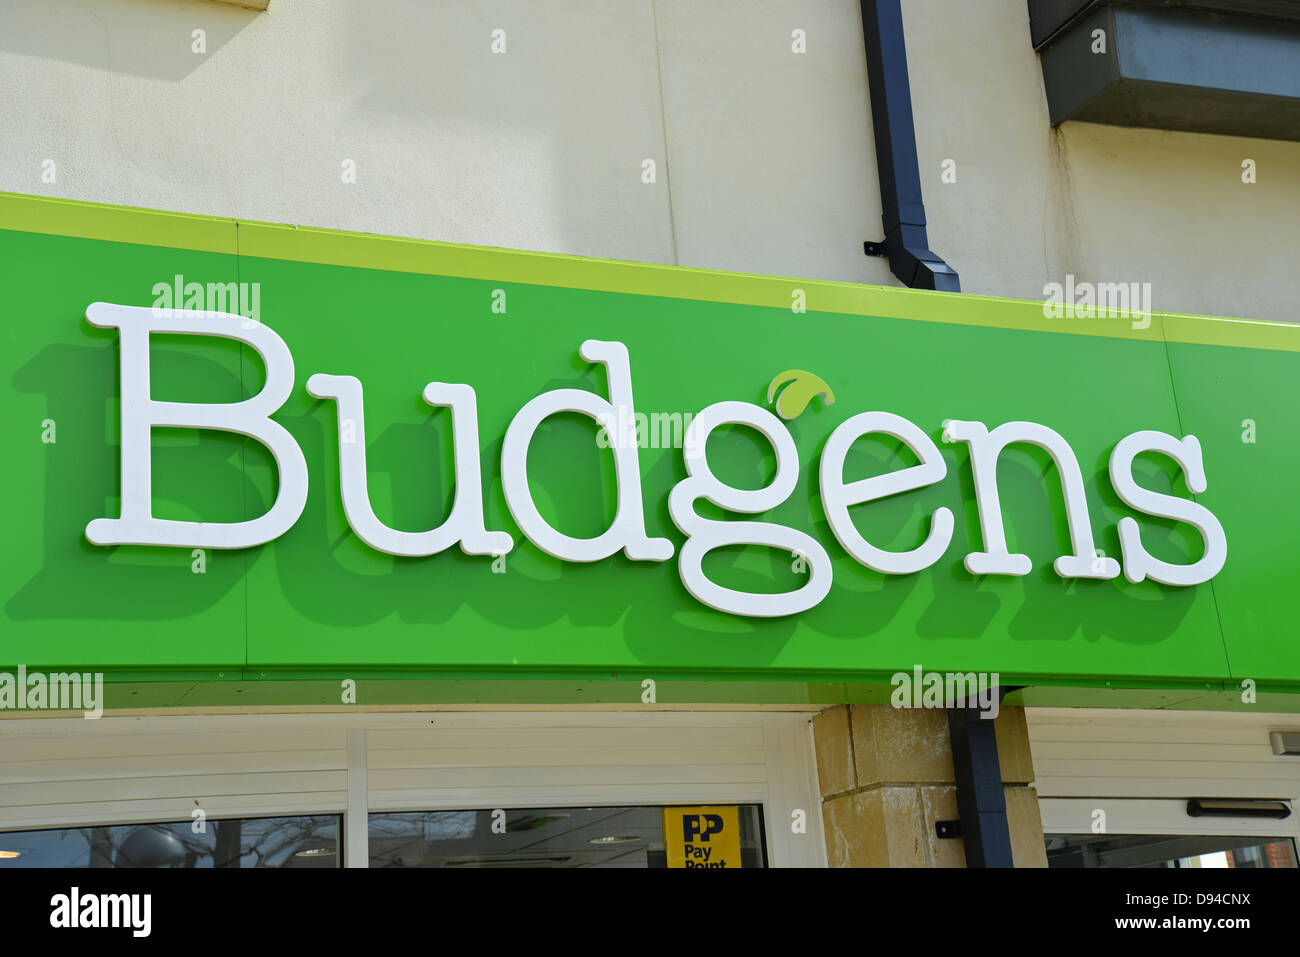 Budgens supermarket sign, Burgess Square, Brackley, Northamptonshire, England, United Kingdom Stock Photo